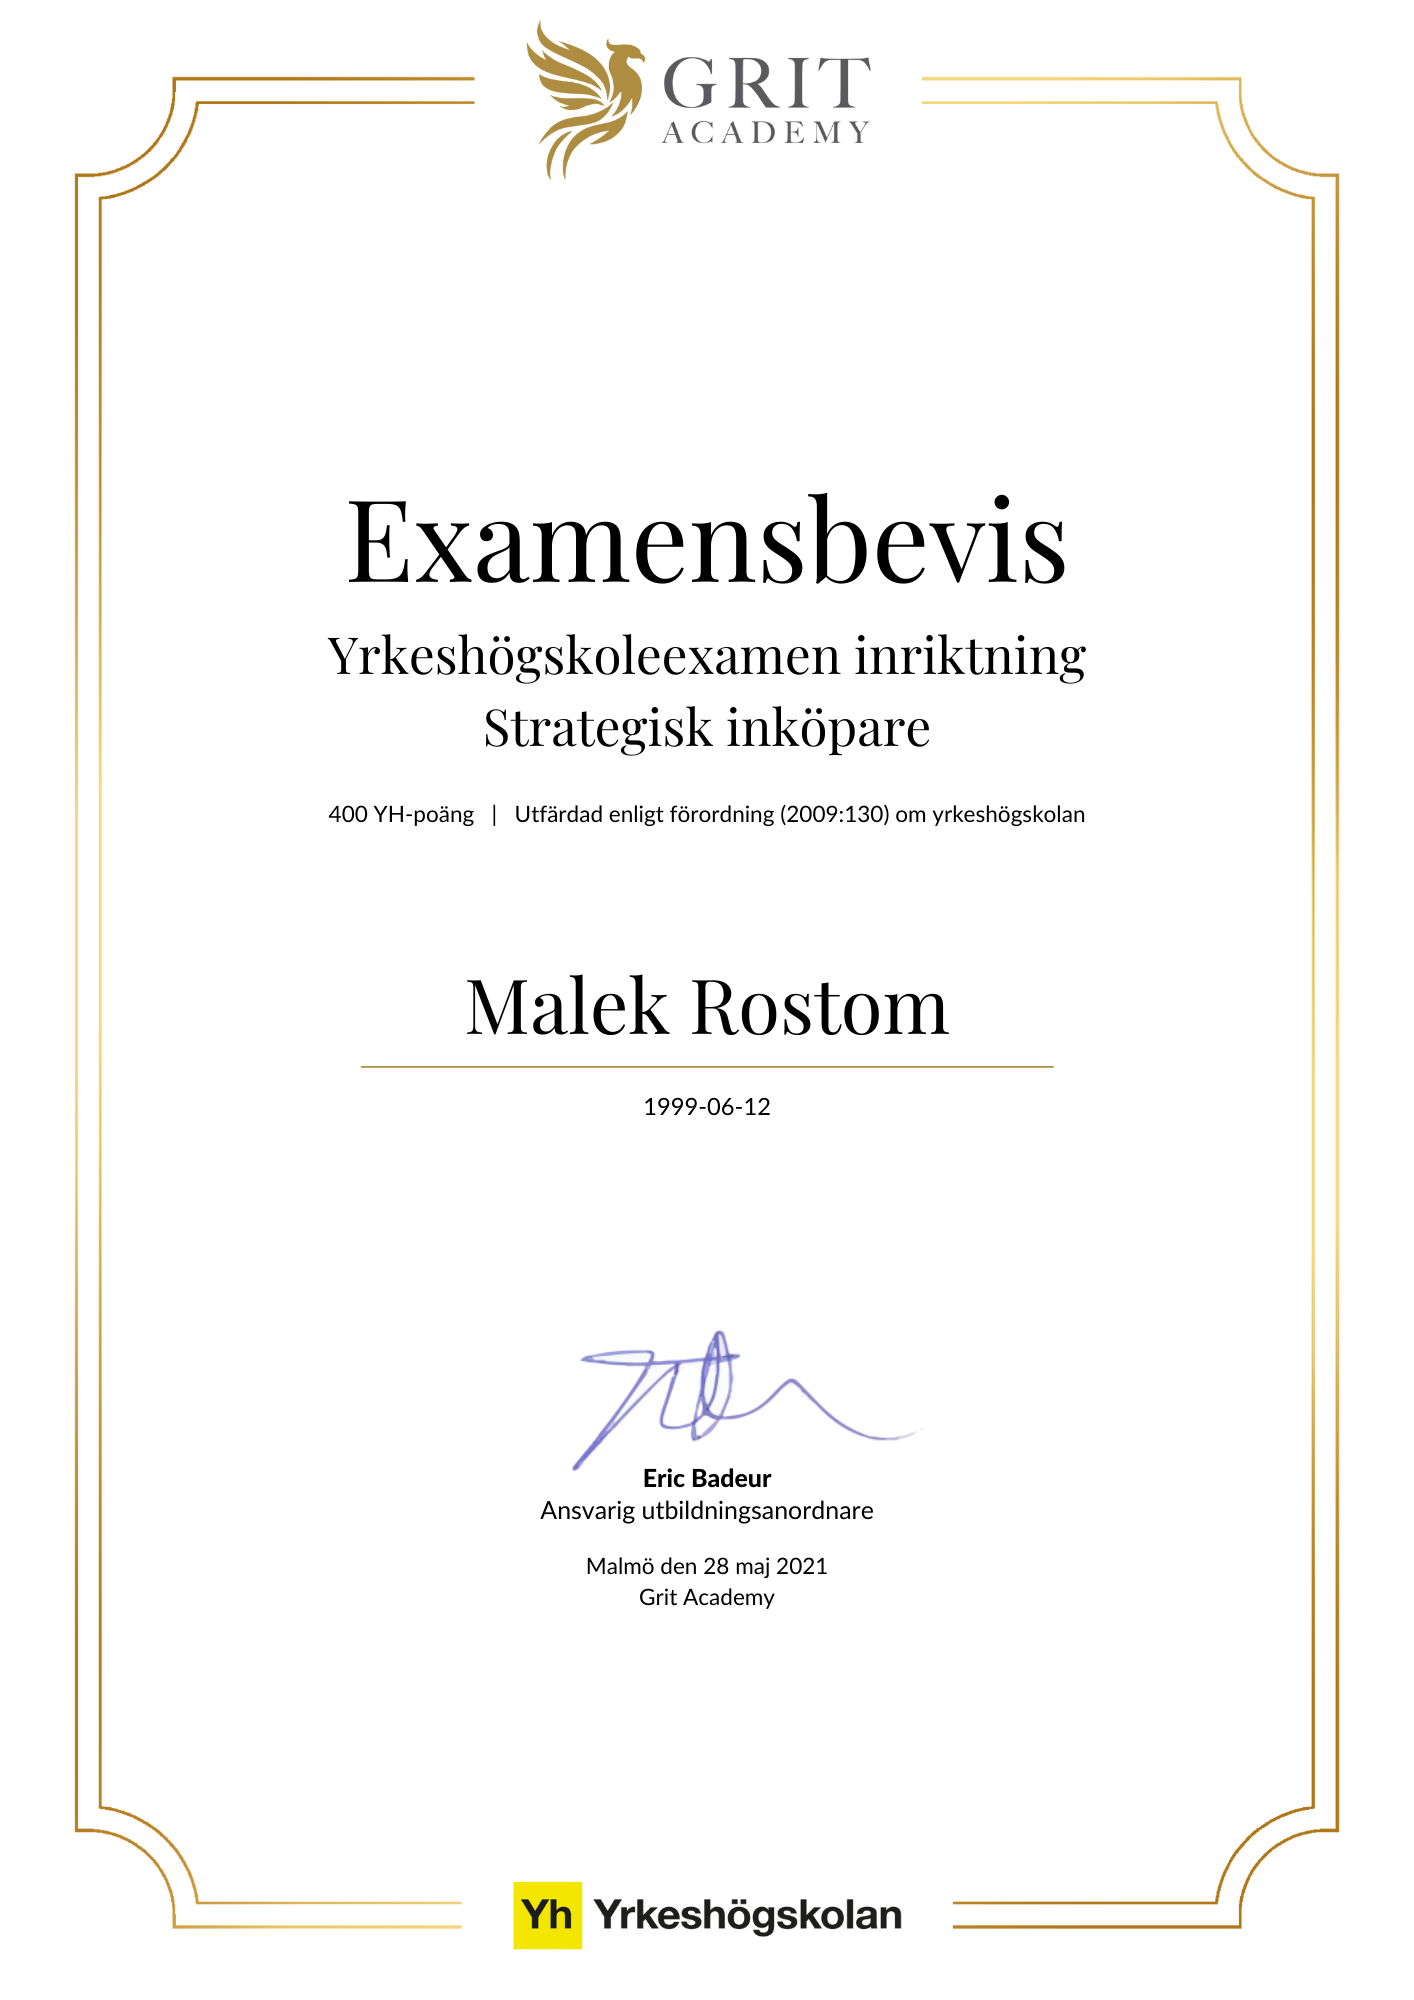 Examensbevis Malek Rostom - 1